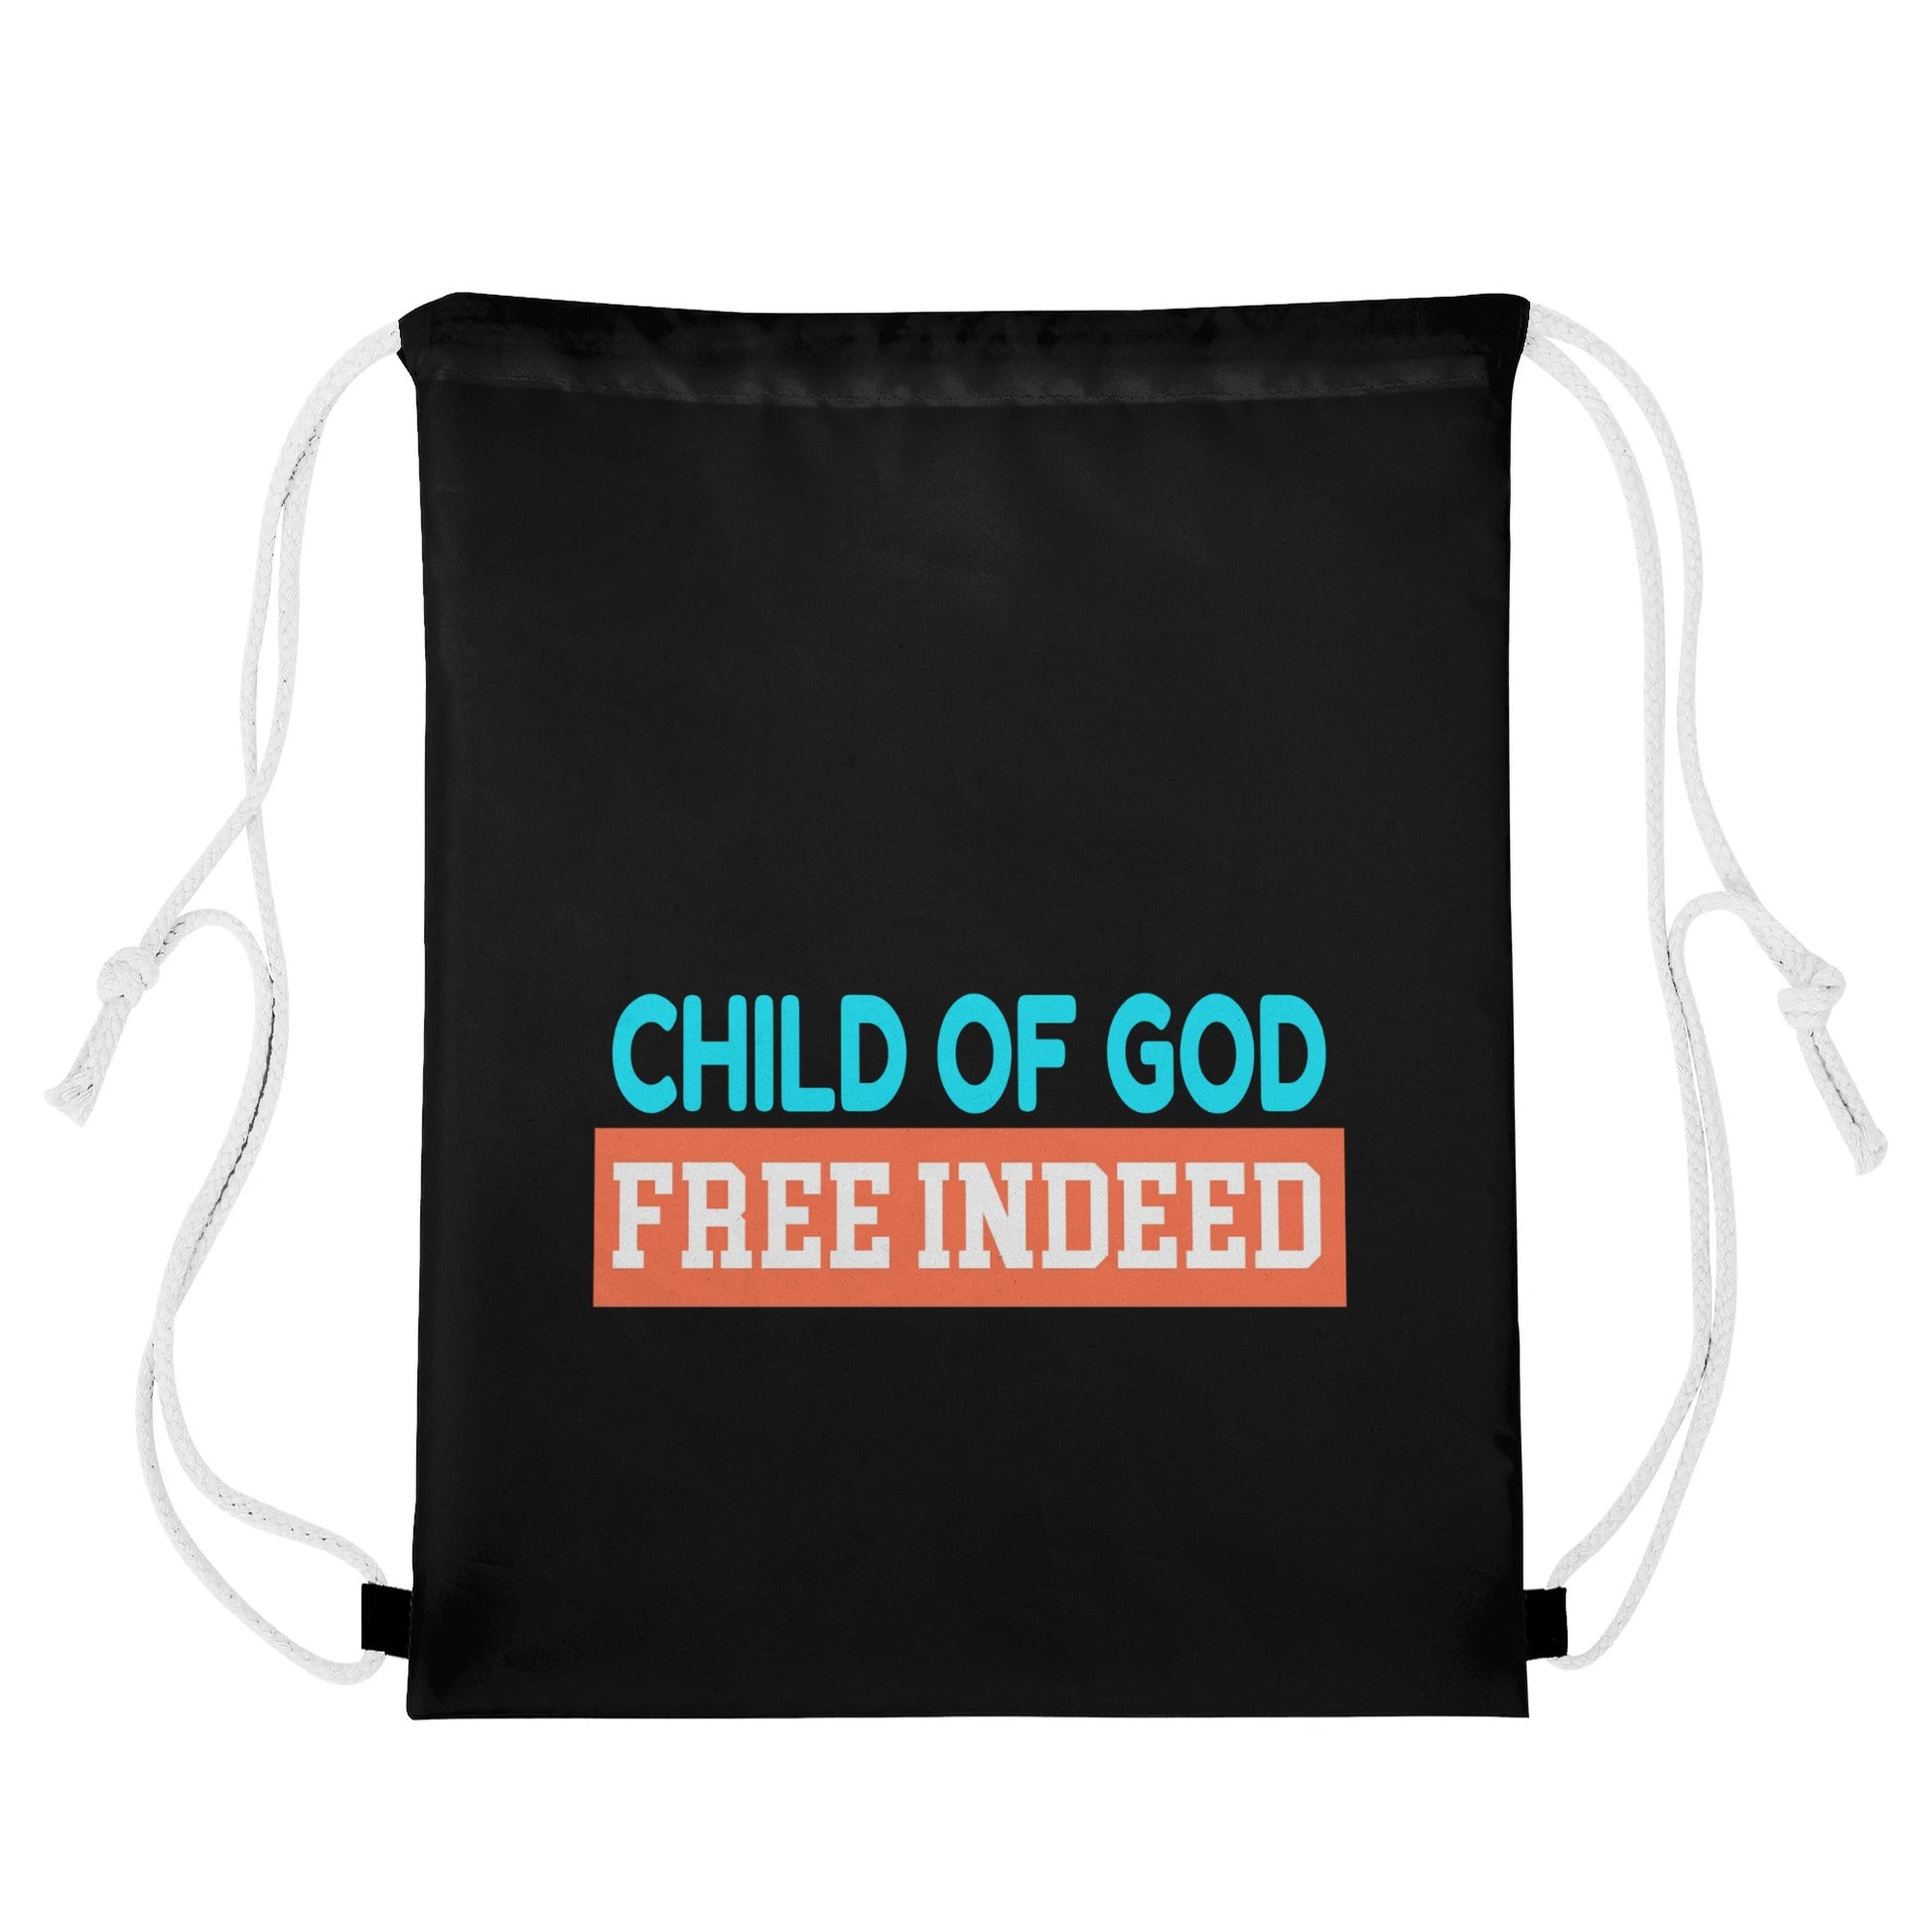 Child Of God Free Indeed Gym Drawstring Bag popcustoms